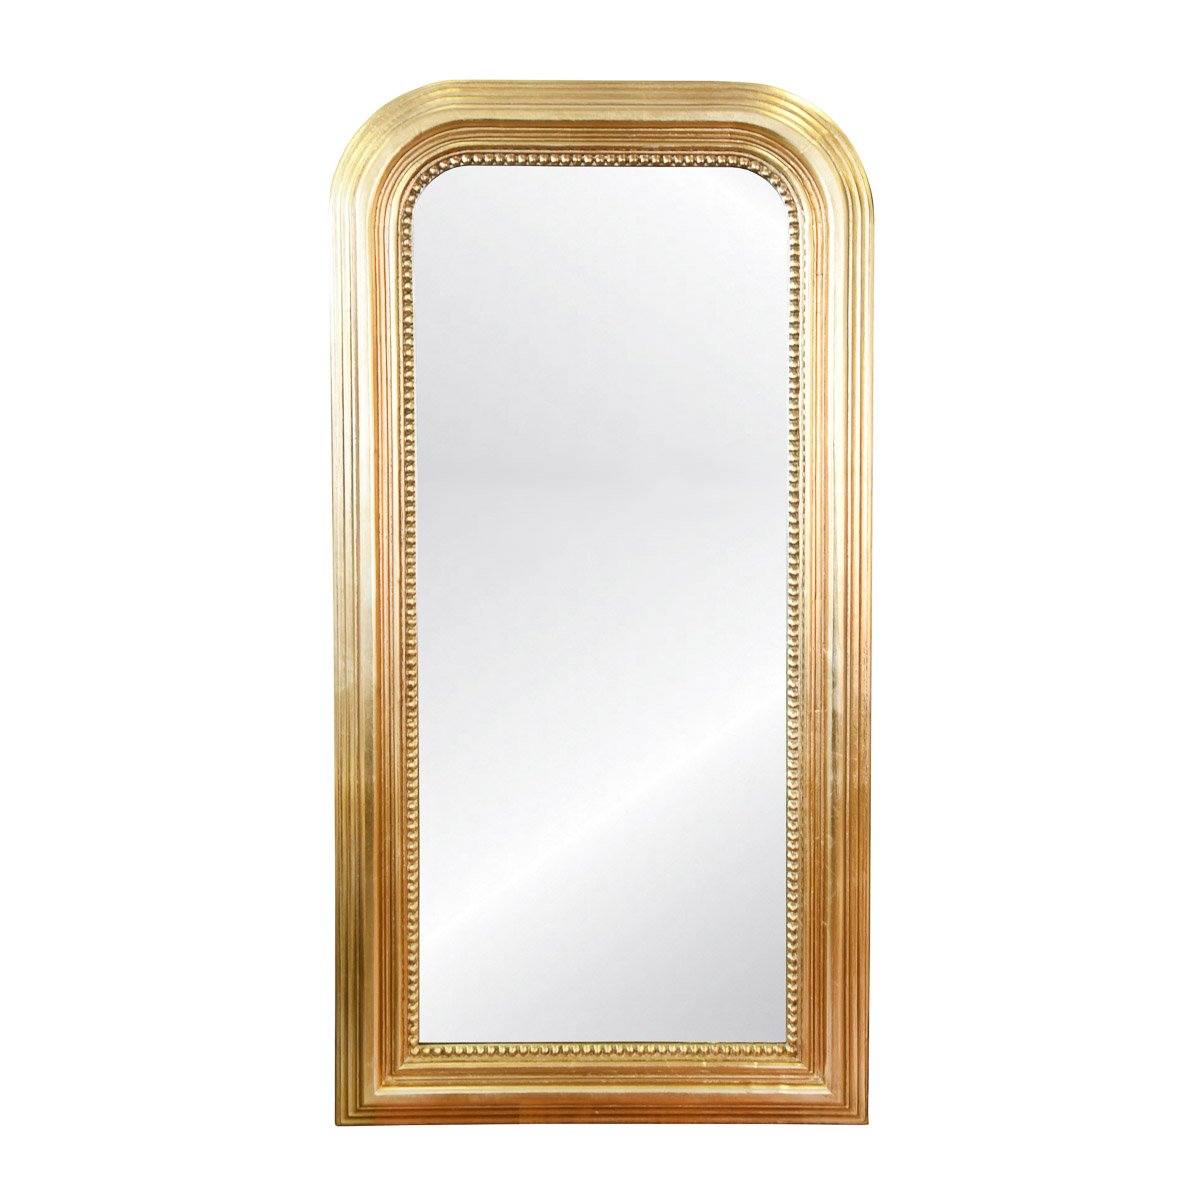 Waverly Floor Mirror Gold Leaf. Front view.